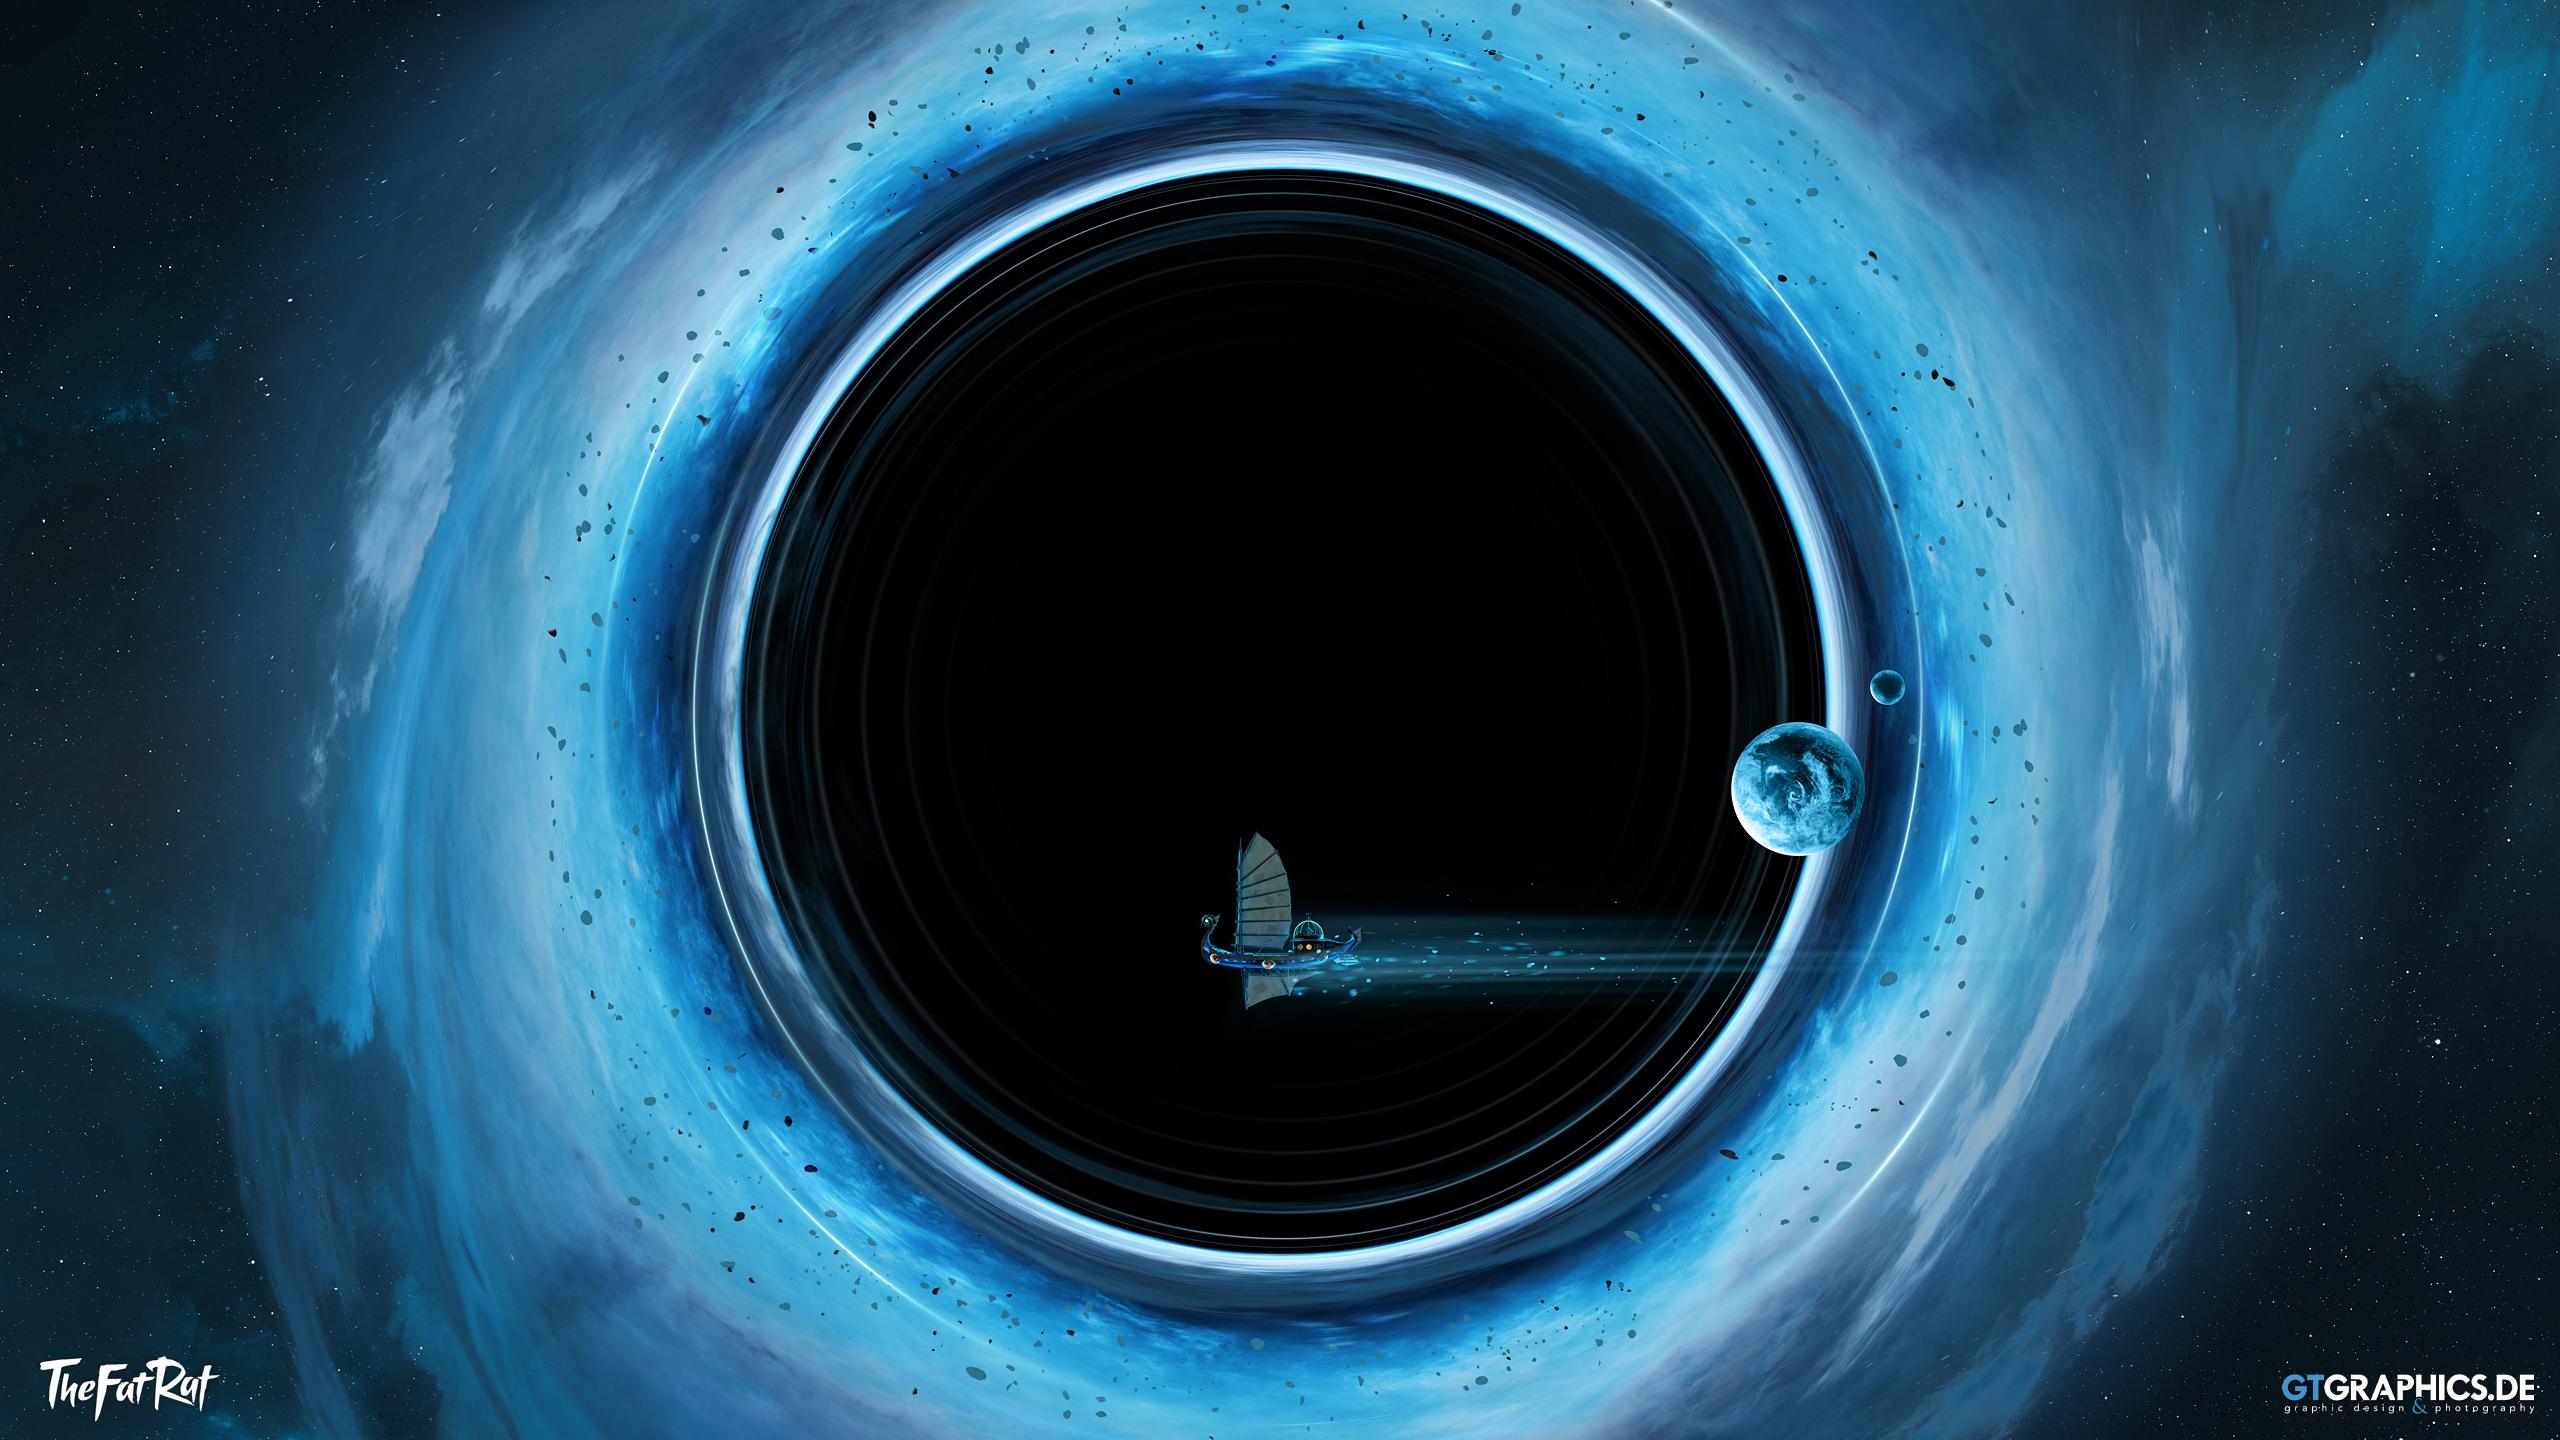 General 2560x1440 GTGraphics digital art artwork illustration CGI space art space black holes boat stars science fiction environment planet TheFatRat watermarked Interstellar (movie)